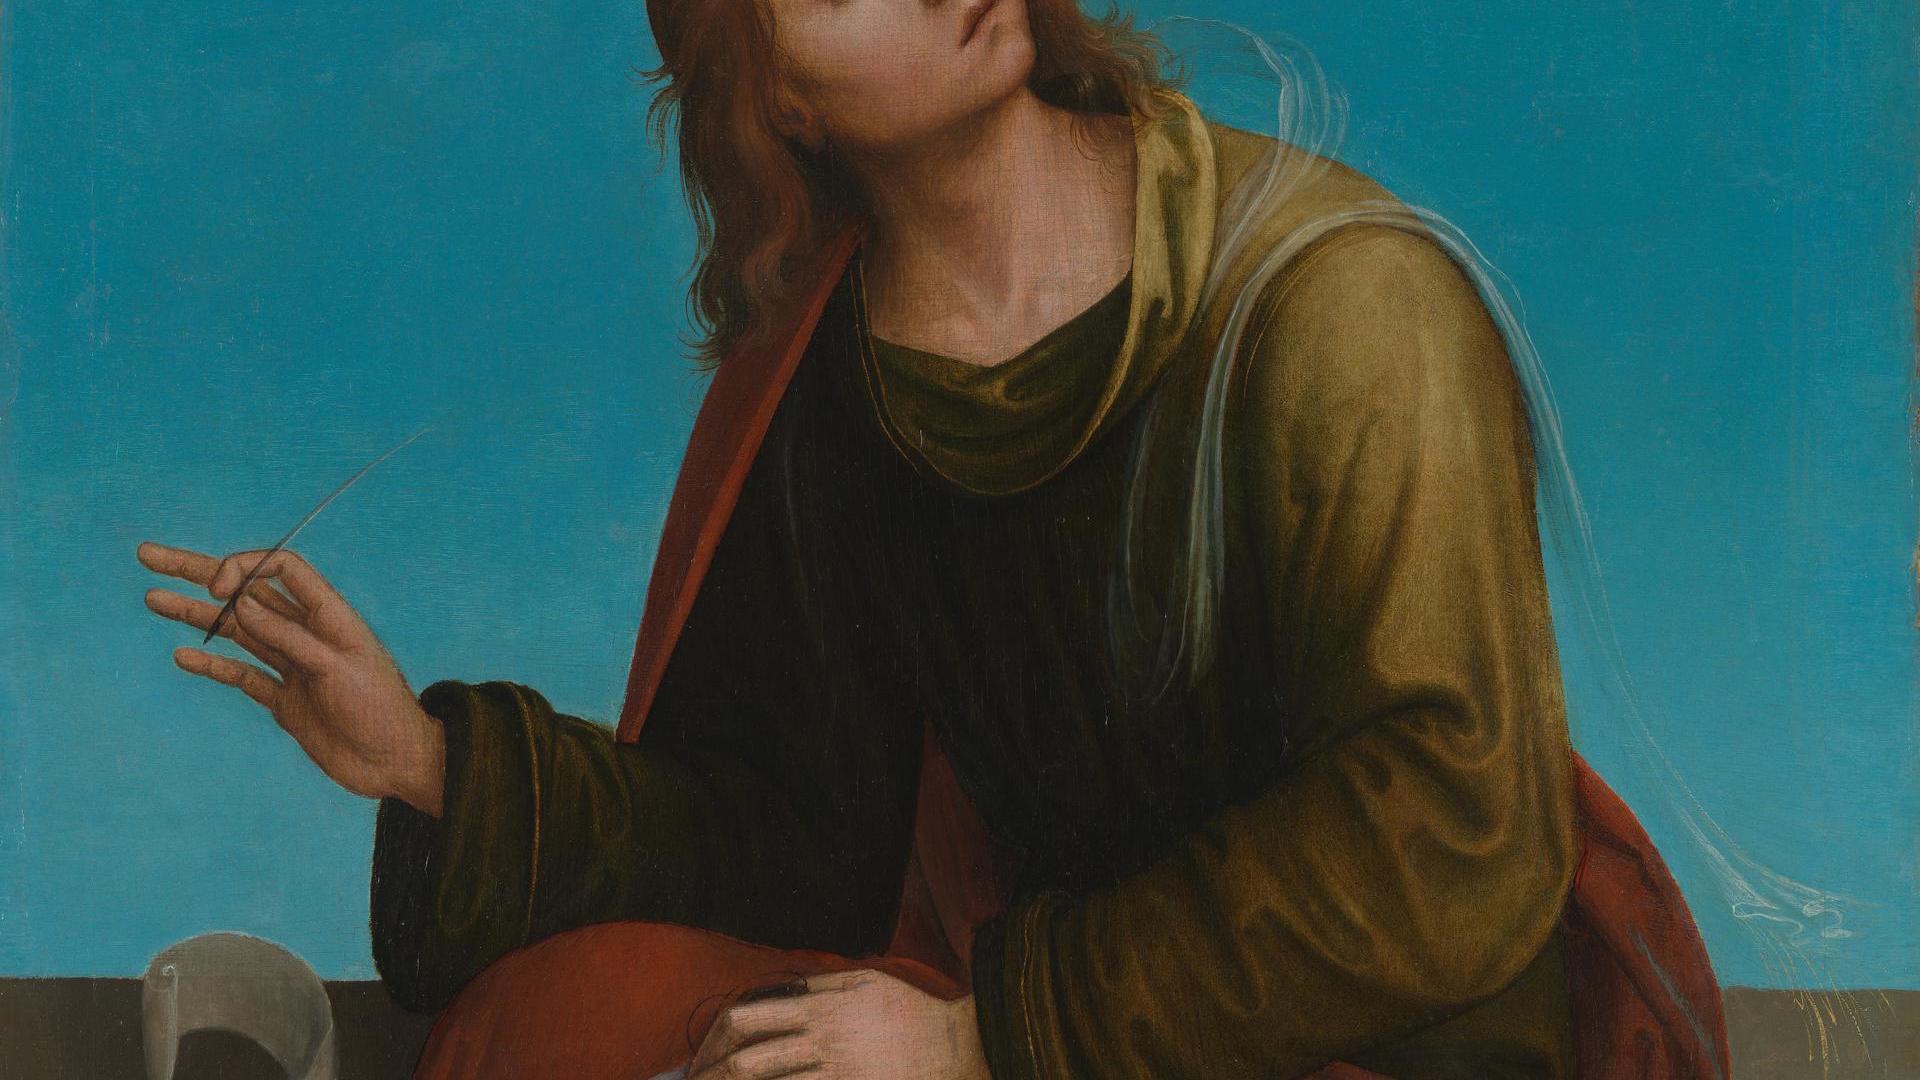 Saint John the Evangelist by Lorenzo Costa